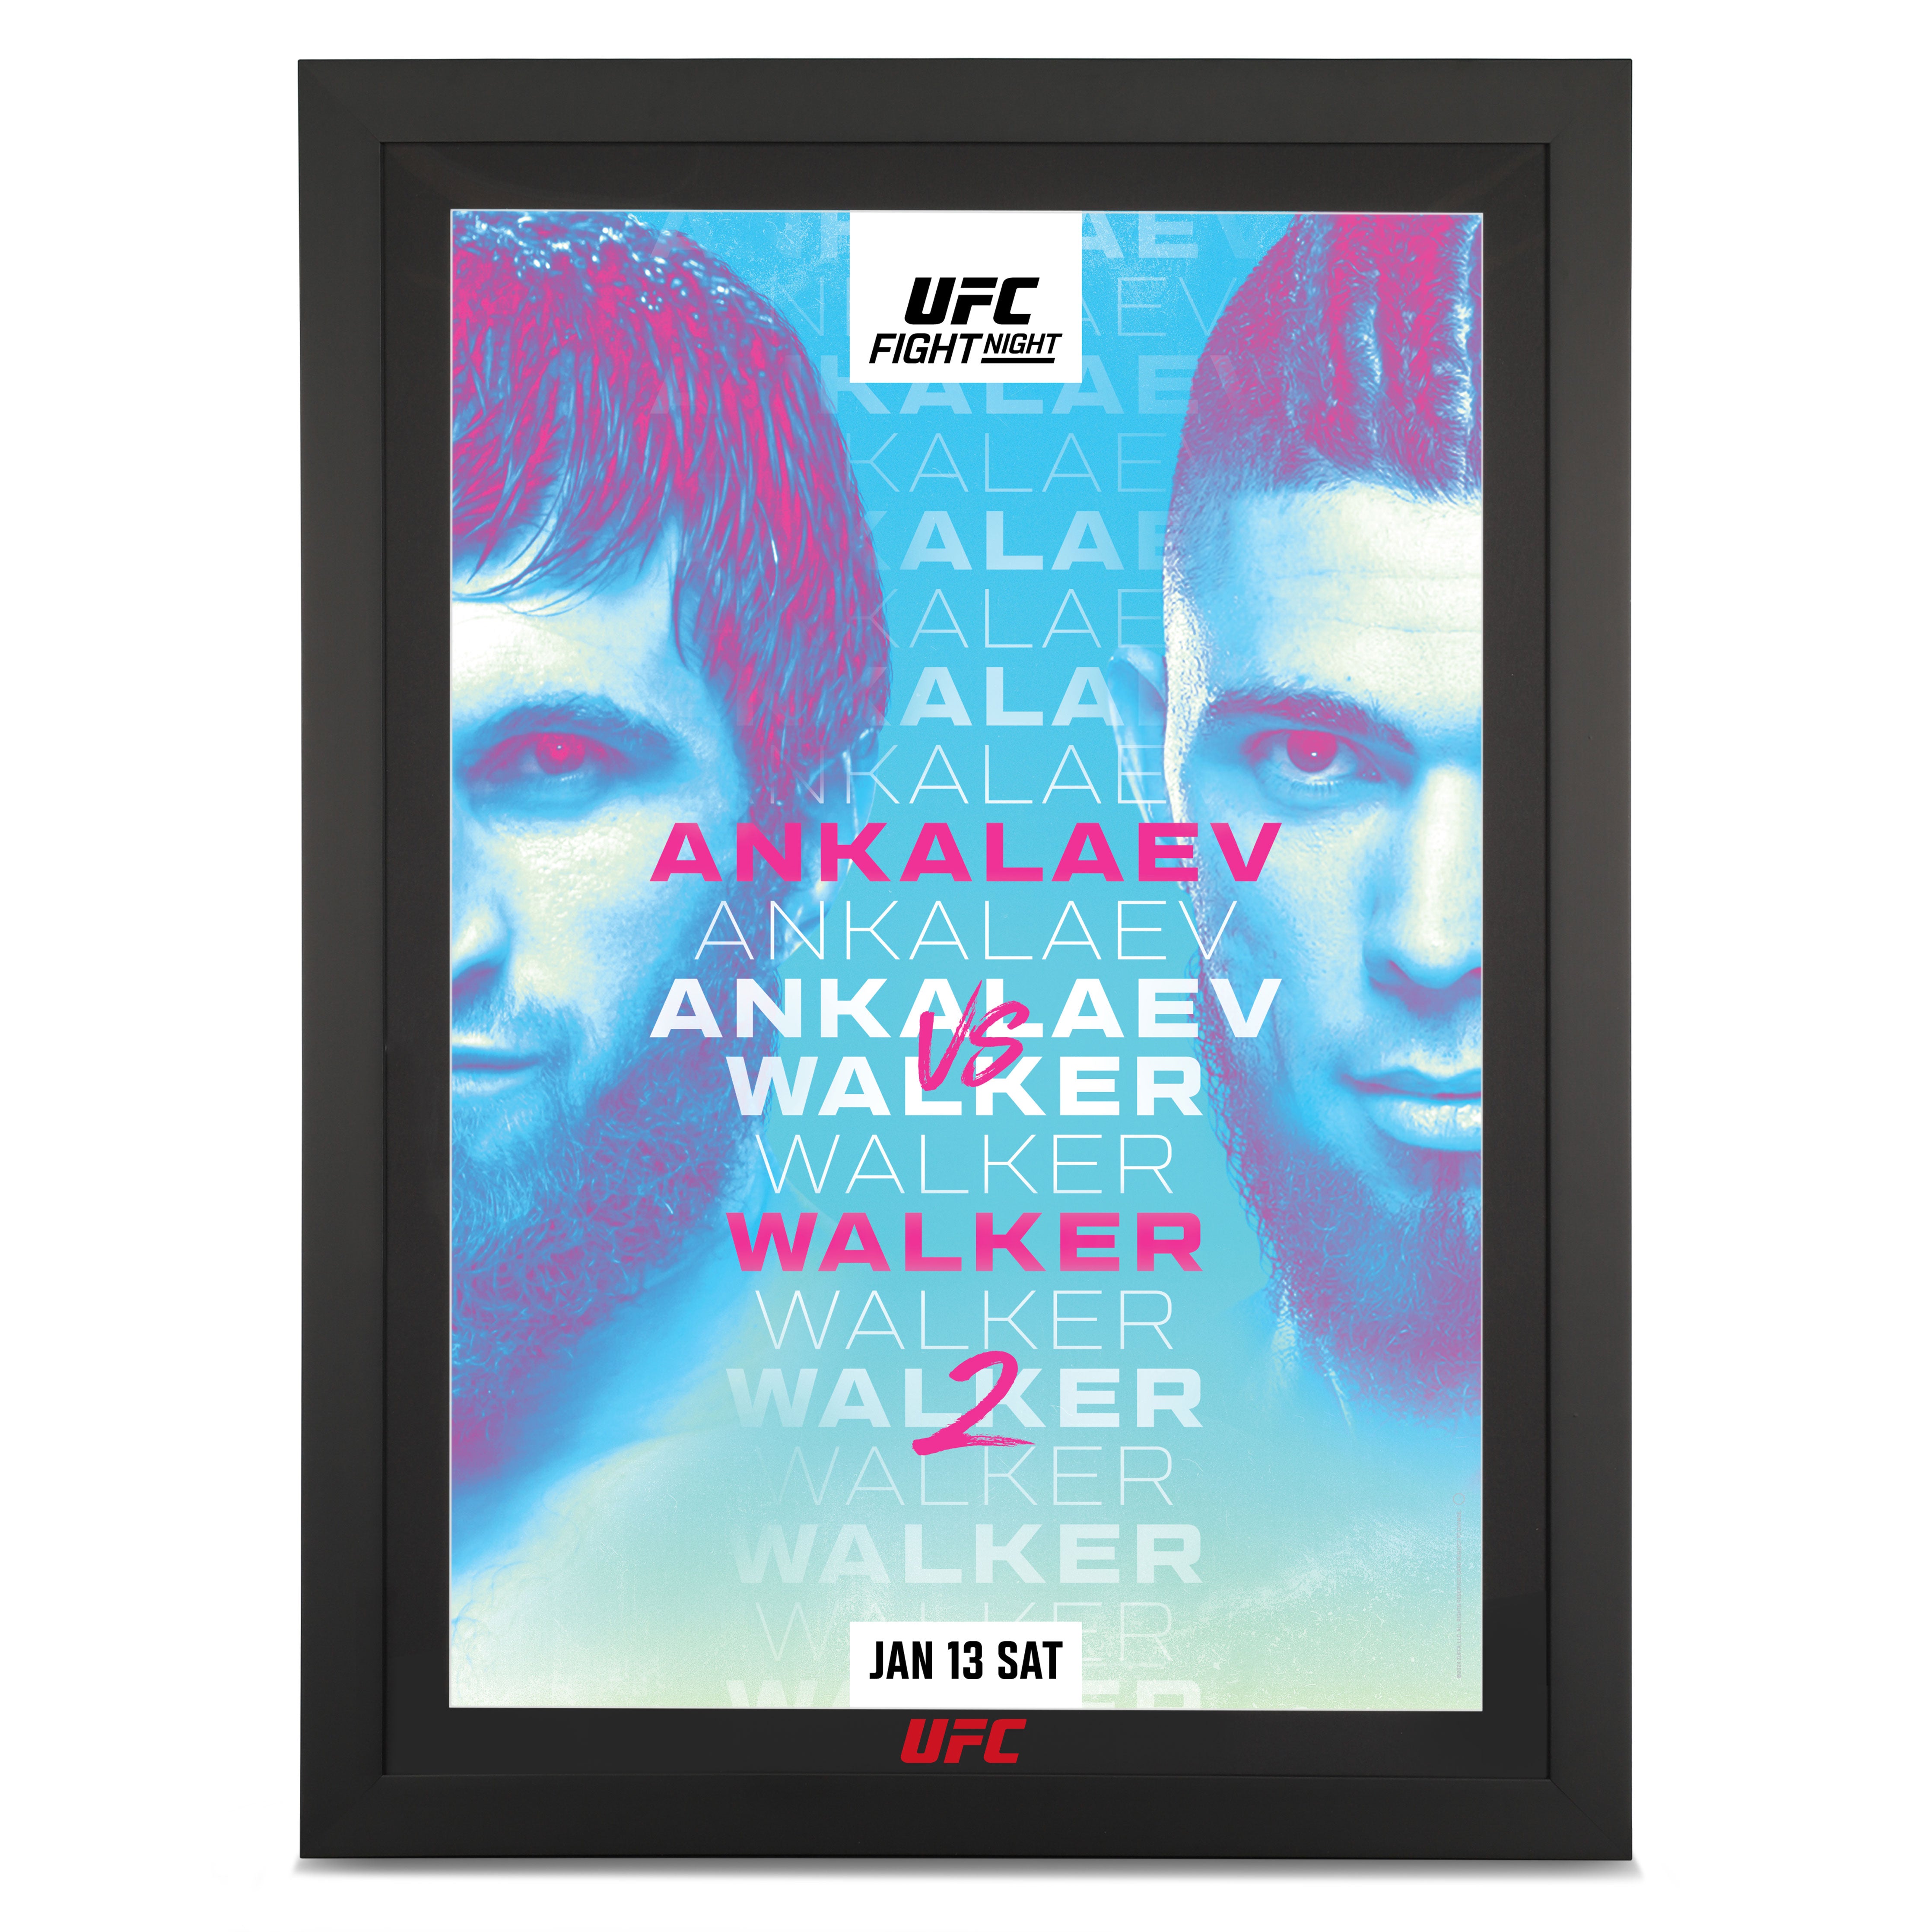 UFC Fight Night: Ankalaev vs Walker 2 Autographed Poster